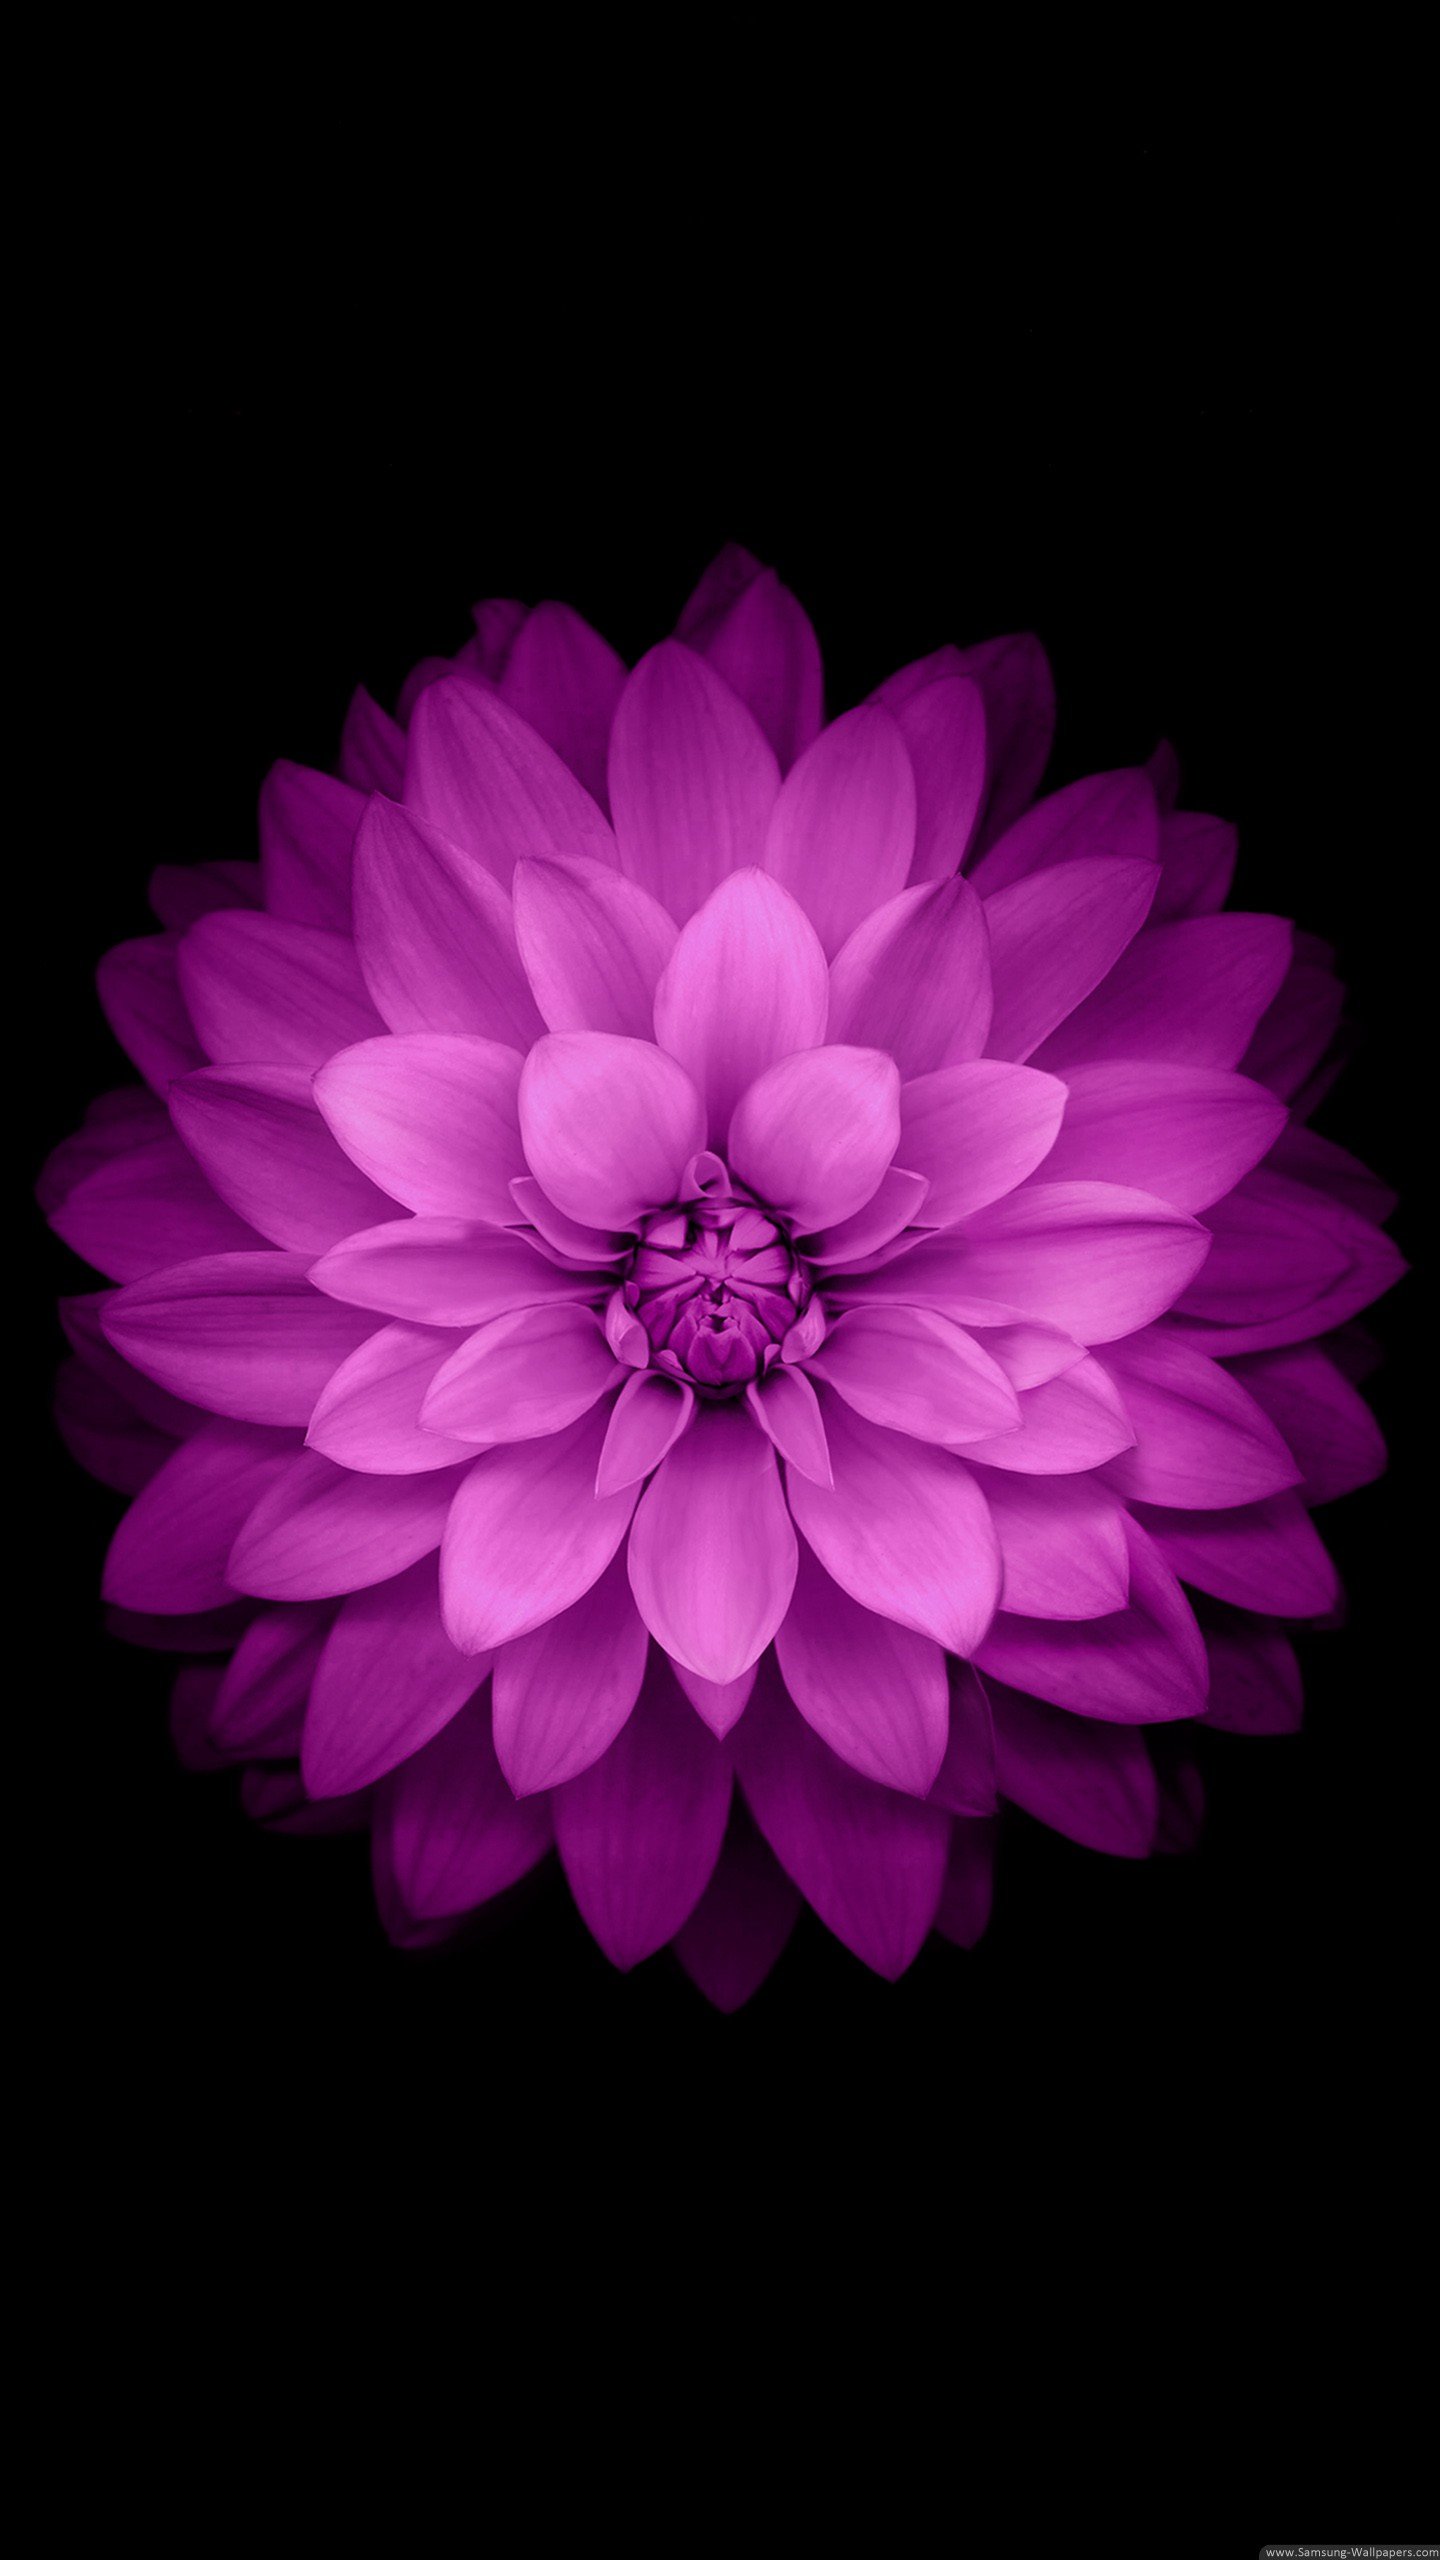 purple flower, Black background Wallpapers HD / Desktop and Mobile